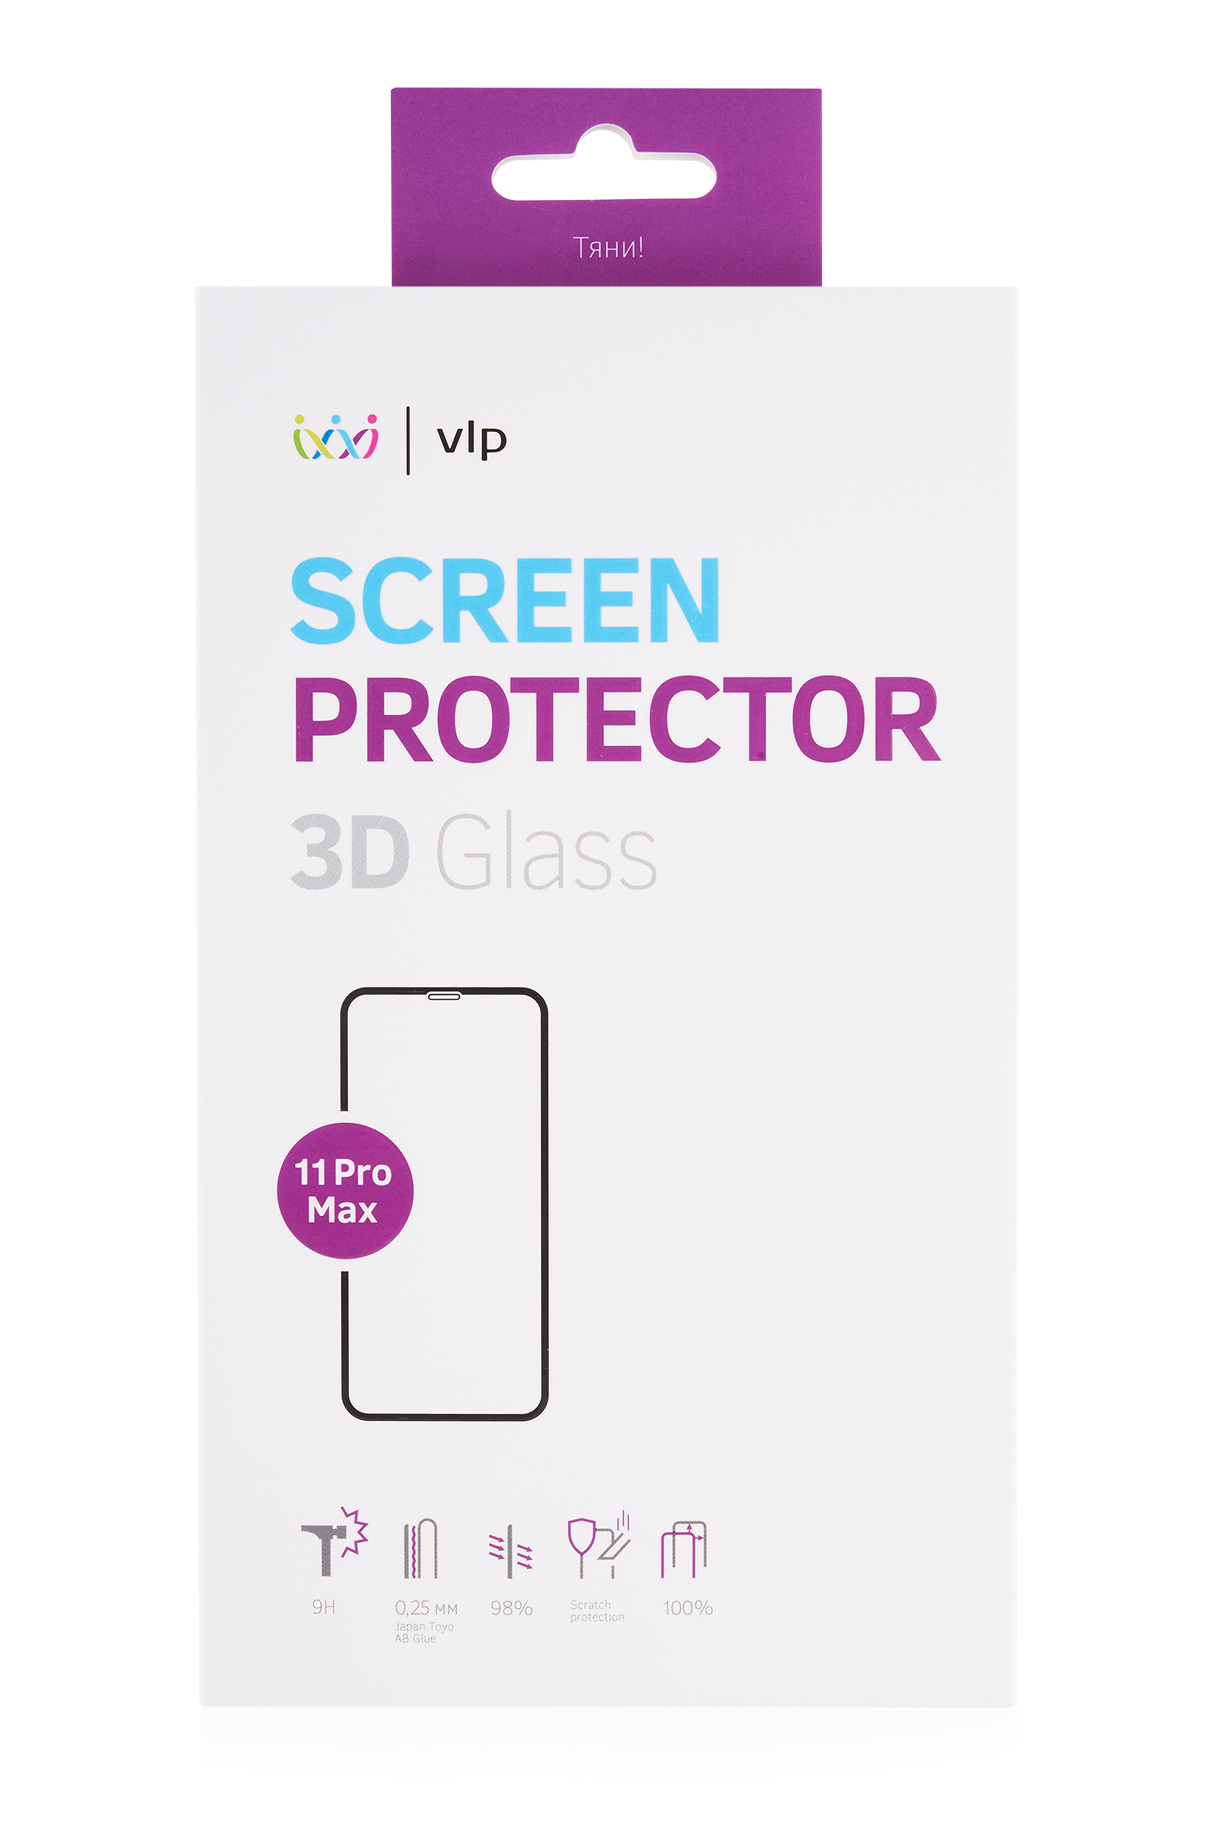 Стекло 3D защитное VLP для iPhone 11 ProMax/XsMax, олеофобное, с черной рамкой стекло 3d защитное vlp для iphone 8 7 олеофобное с черной рамкой